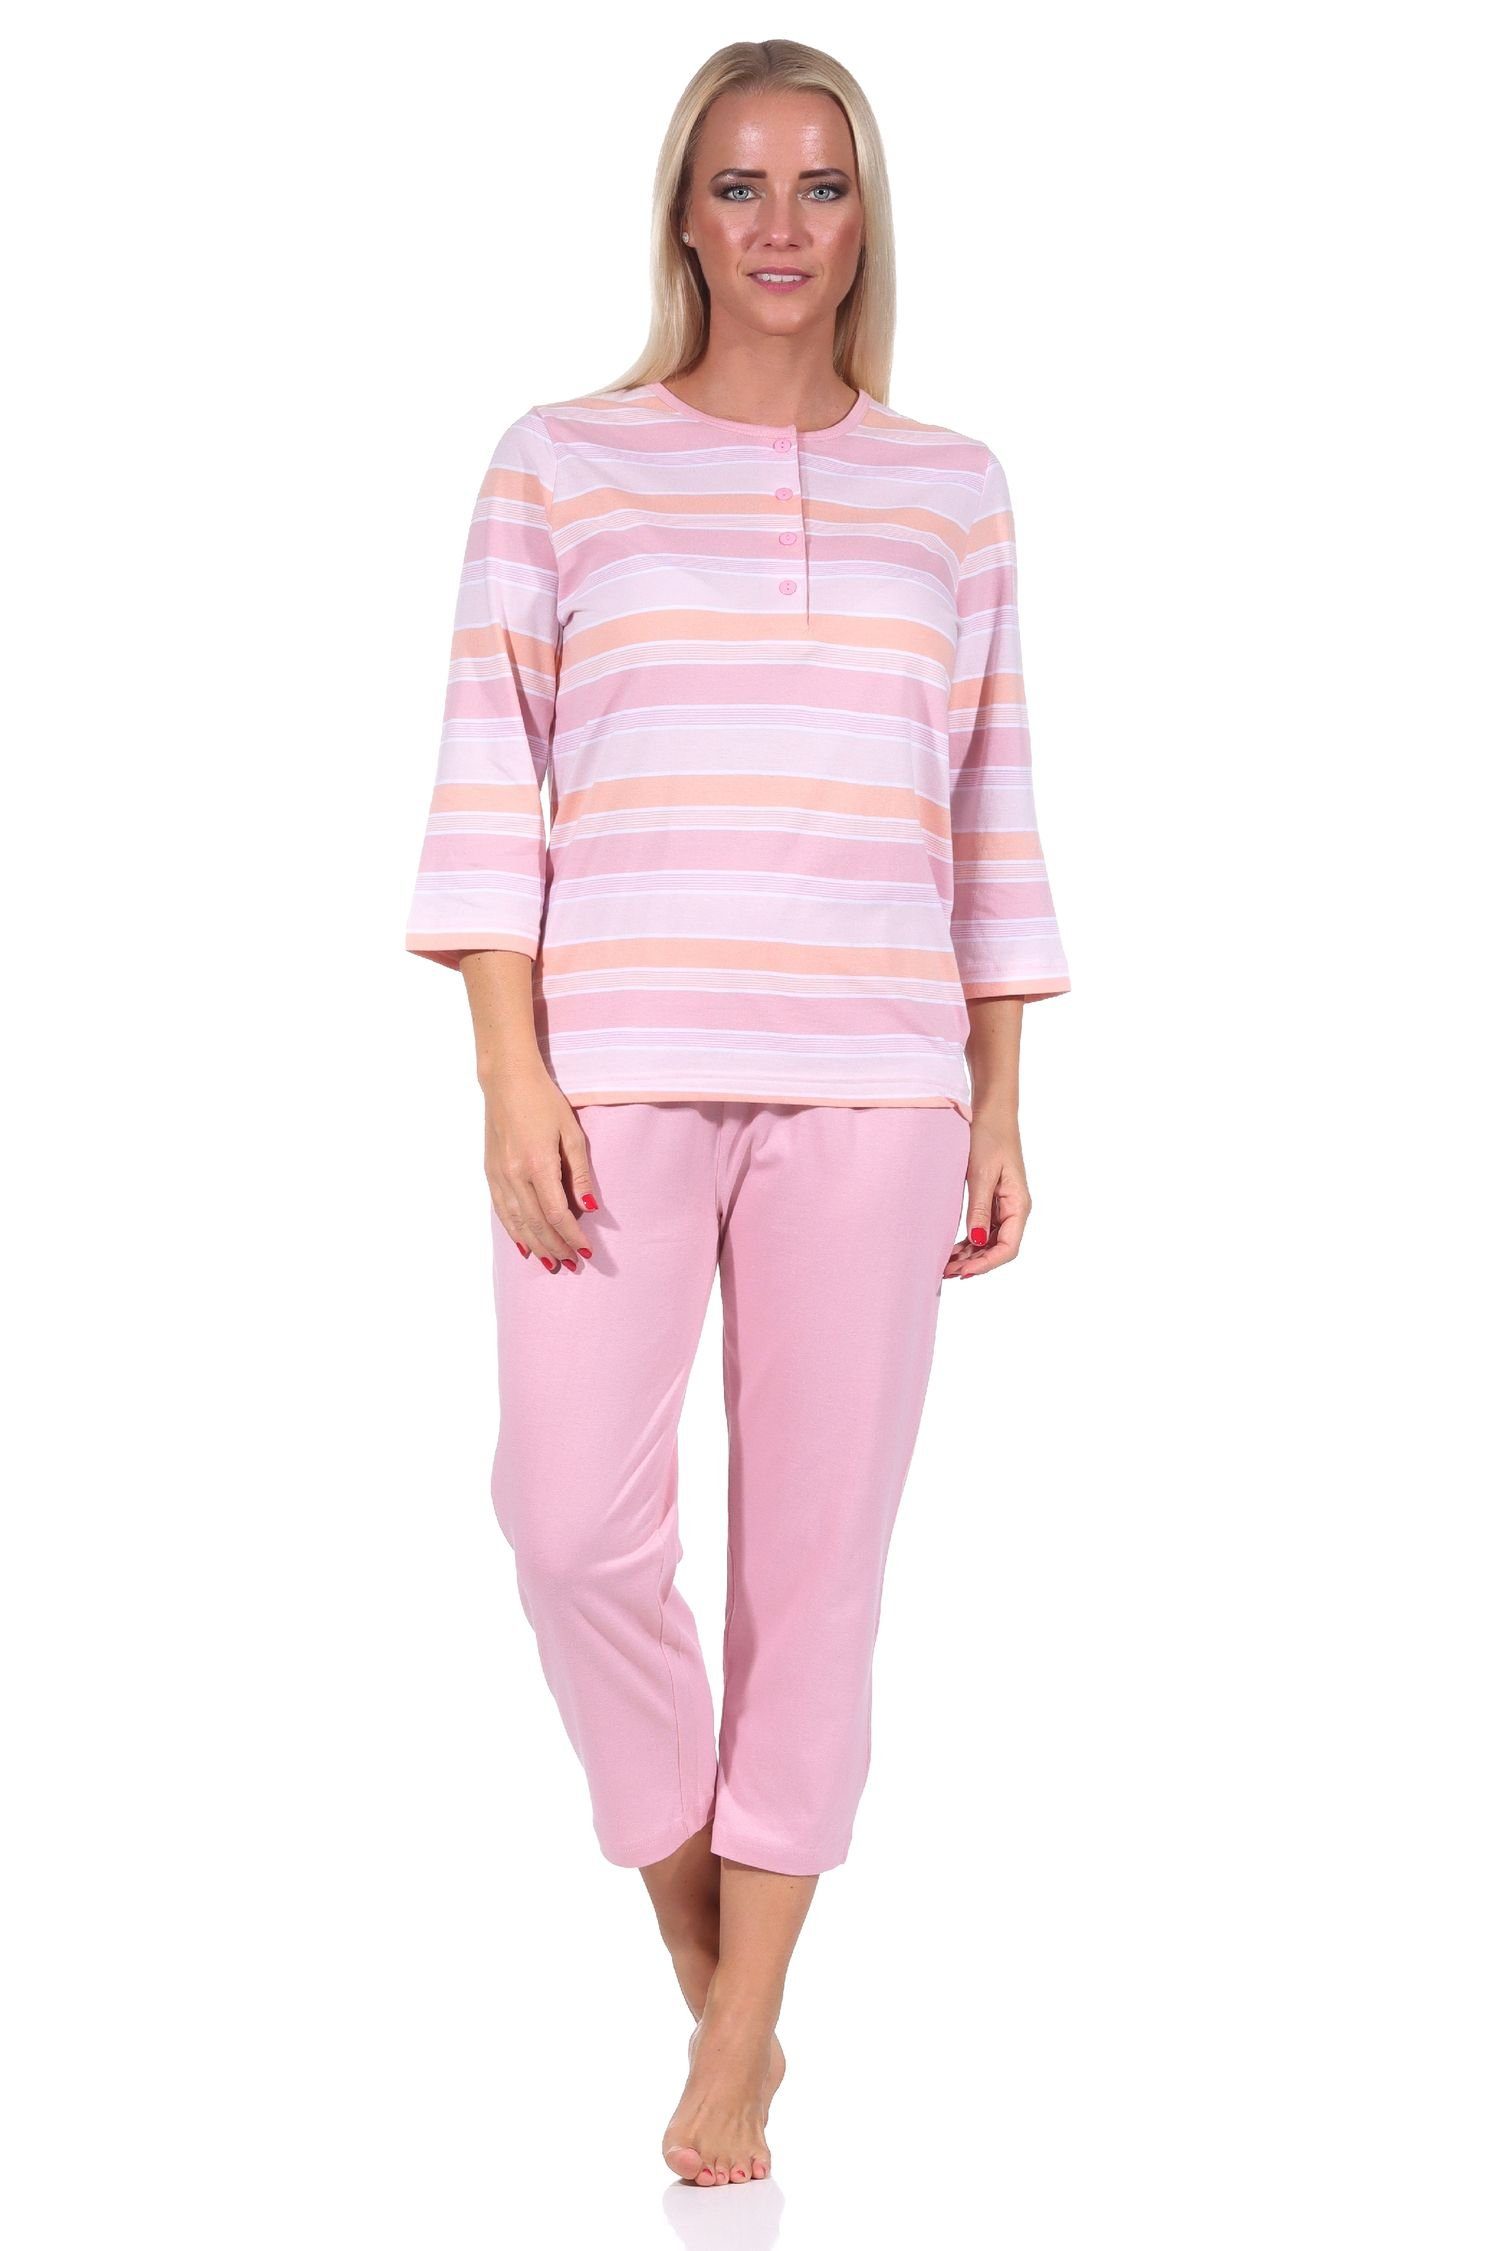 Damen Capri Pyjama Schlafanzug Kurzarm im maritimen Streifen Look 66271 